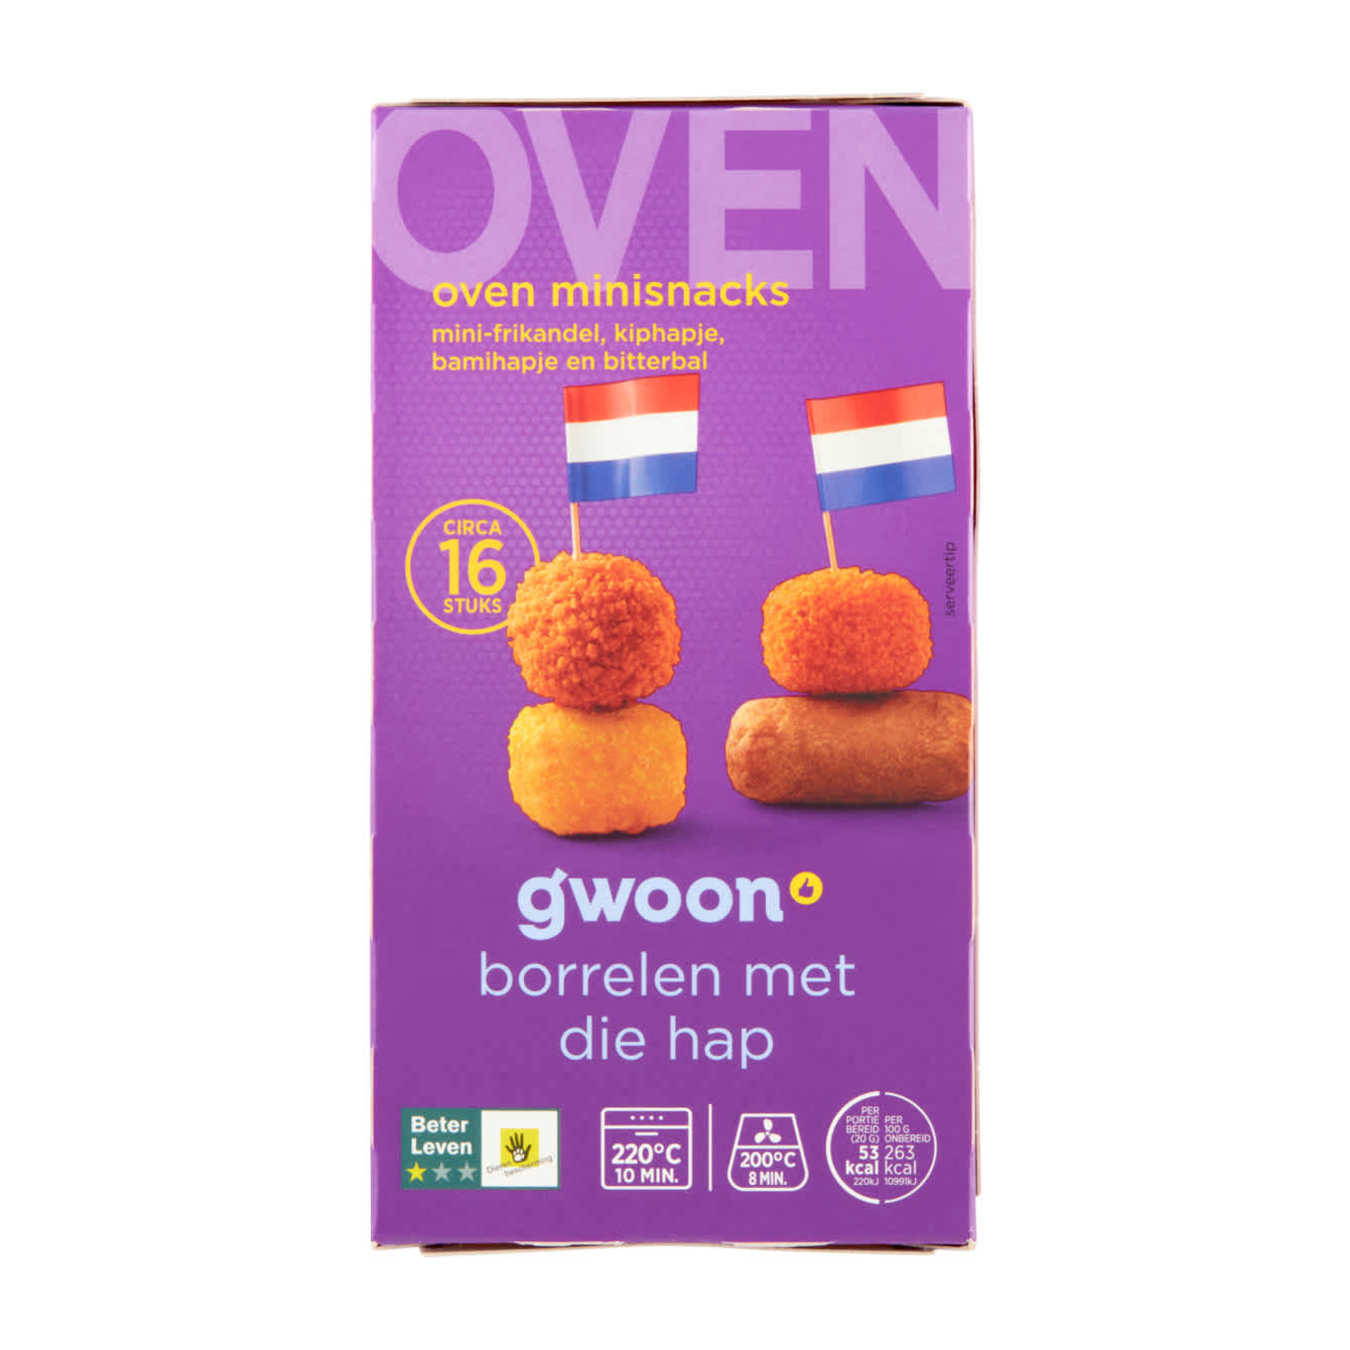 g’woon Oven mini snacks